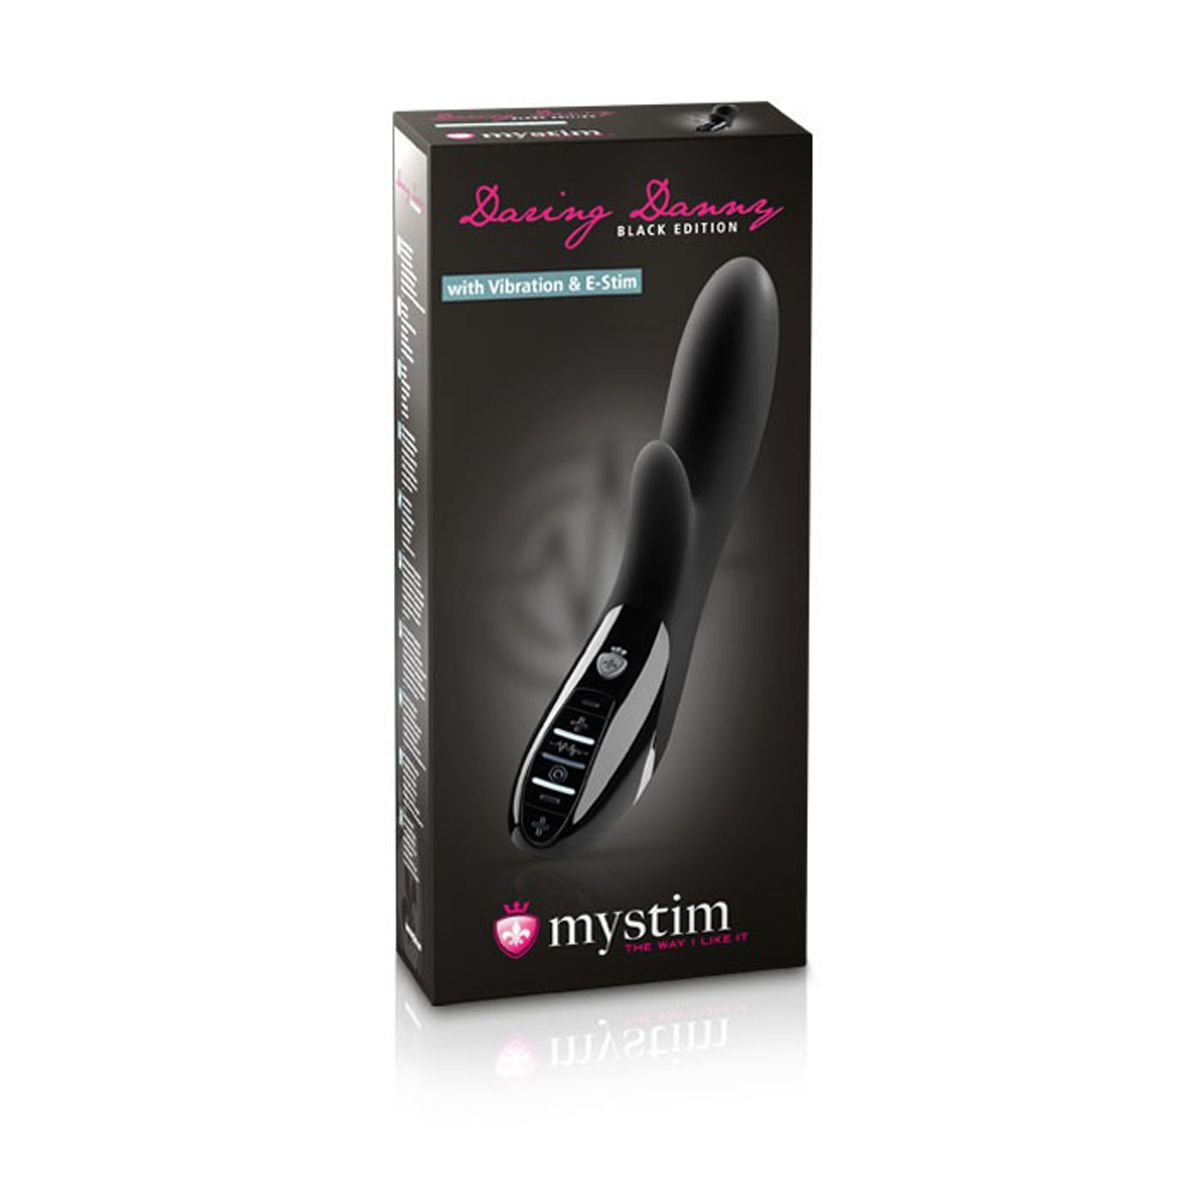 Vibrator MYSTIM Black - Daring Edition Danny E-Stim